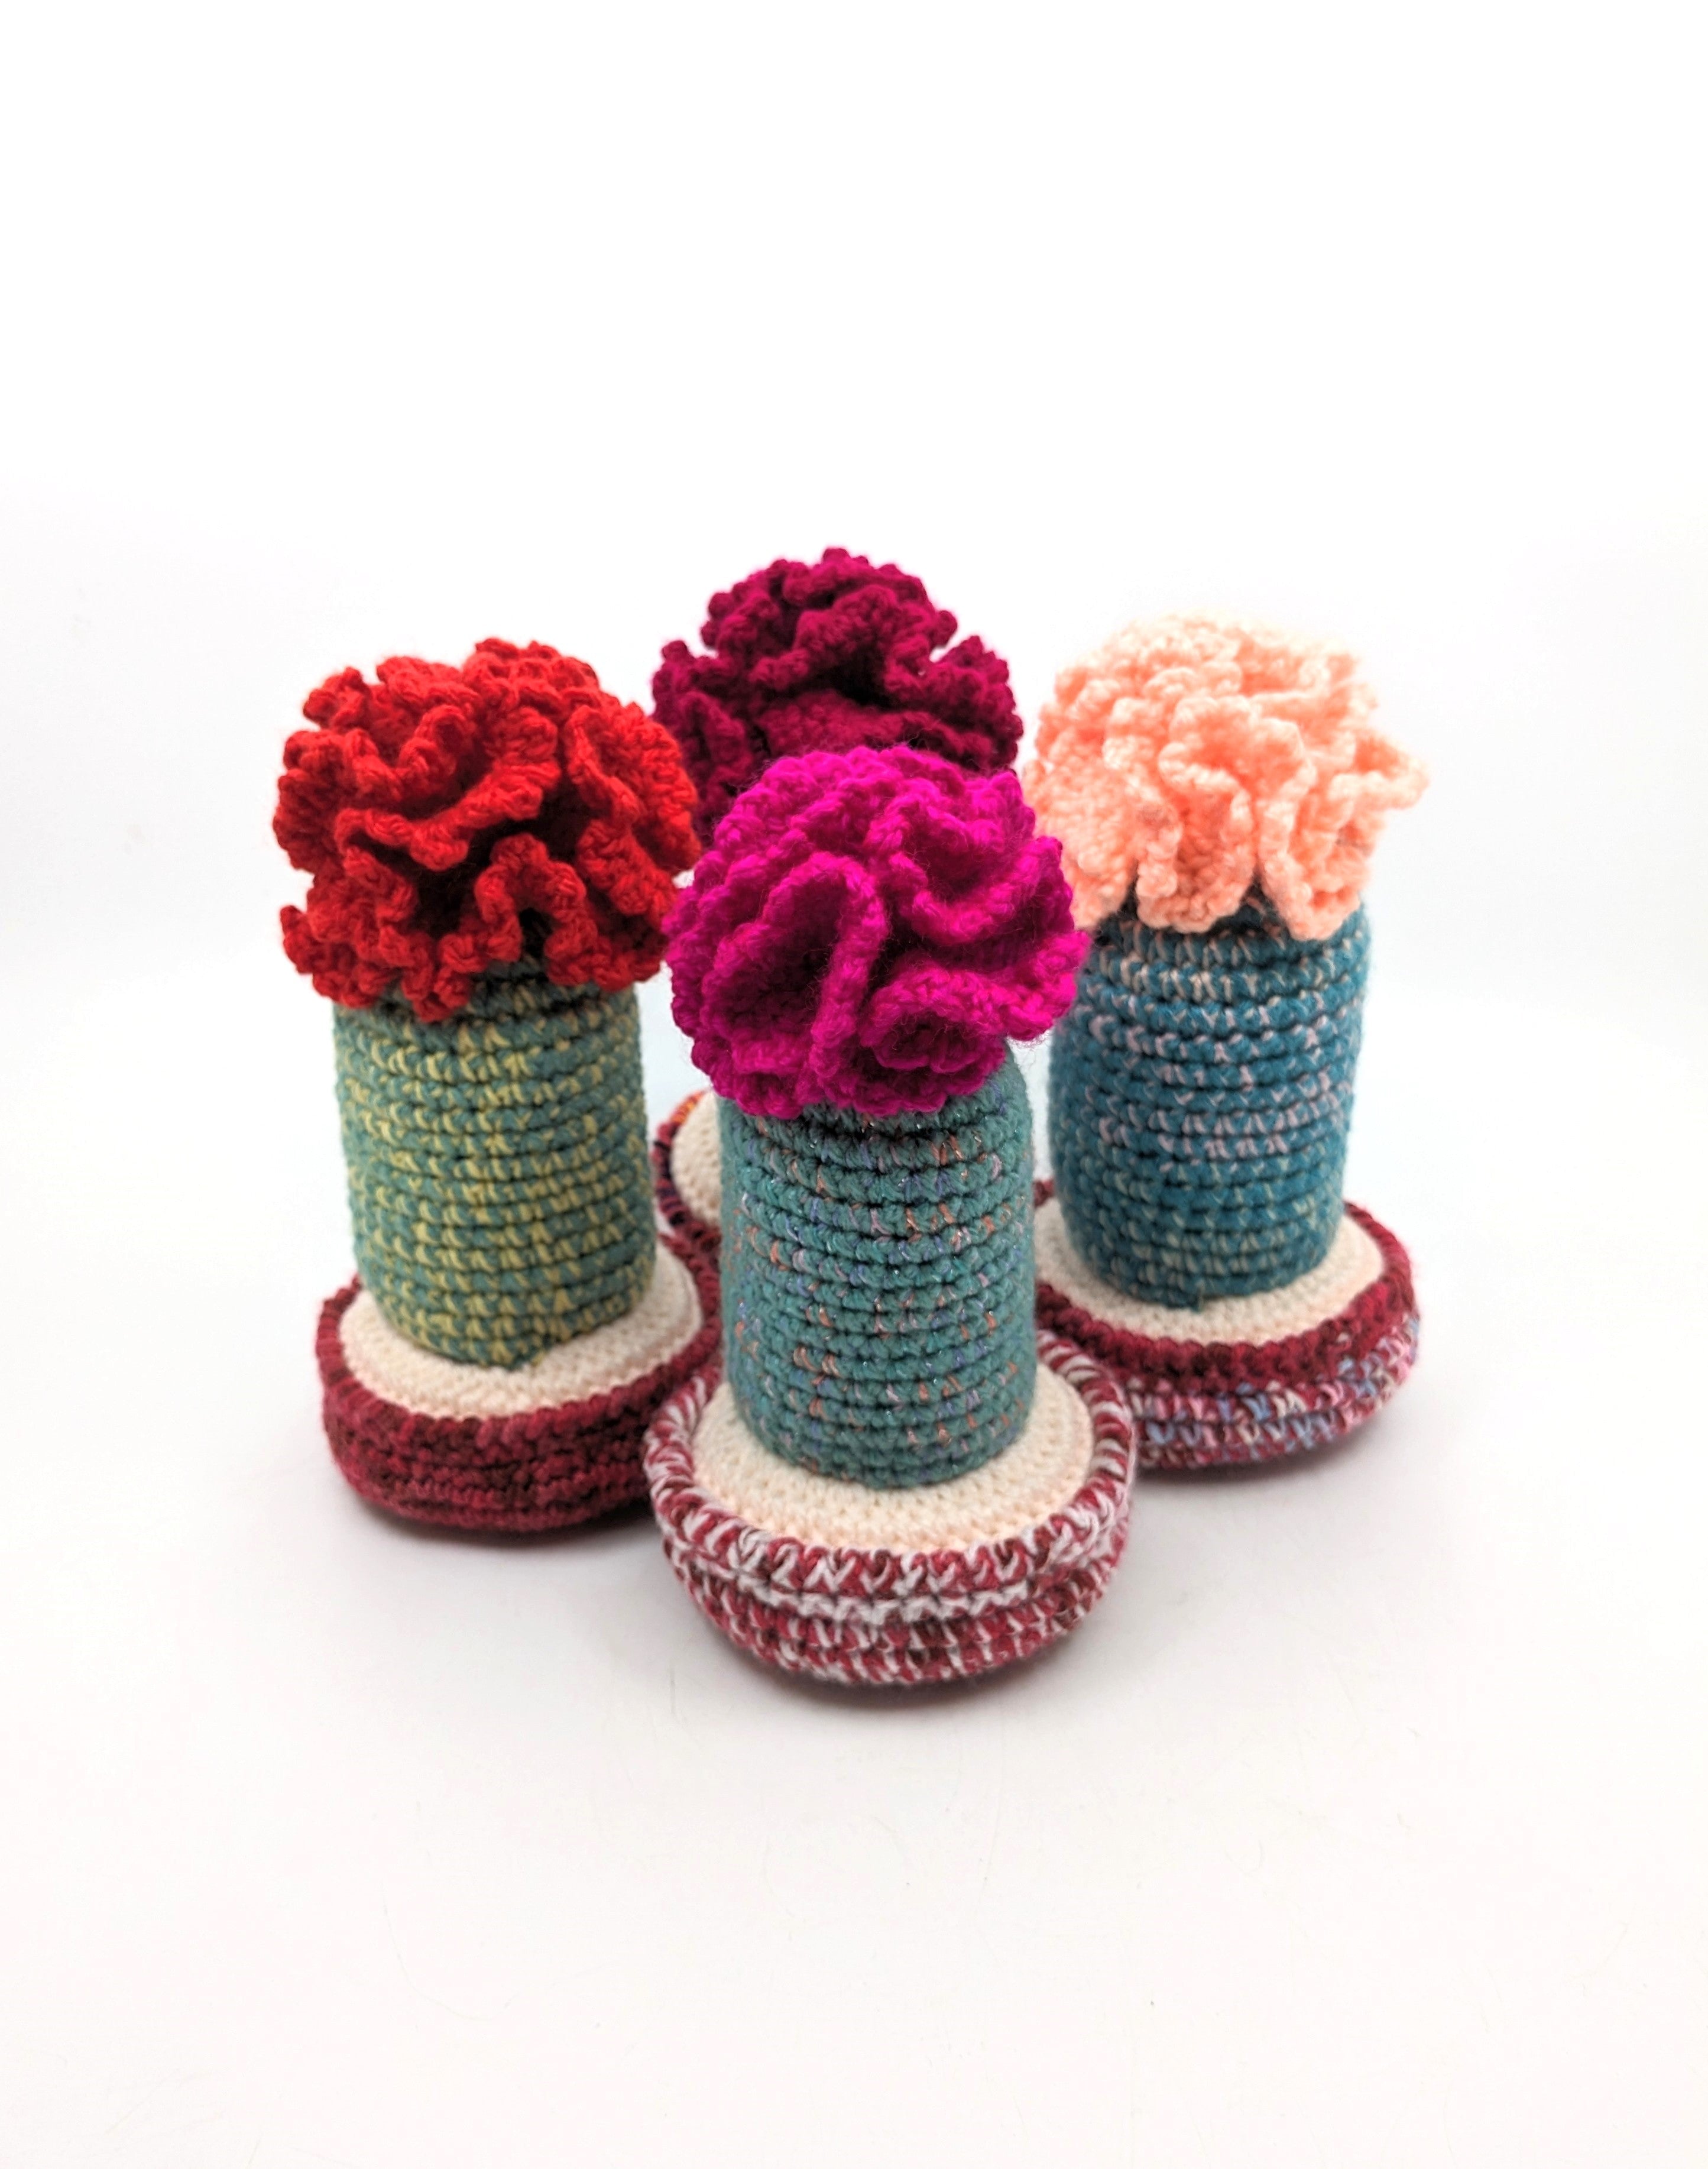 Assorted Cactuses - Millie Radovic